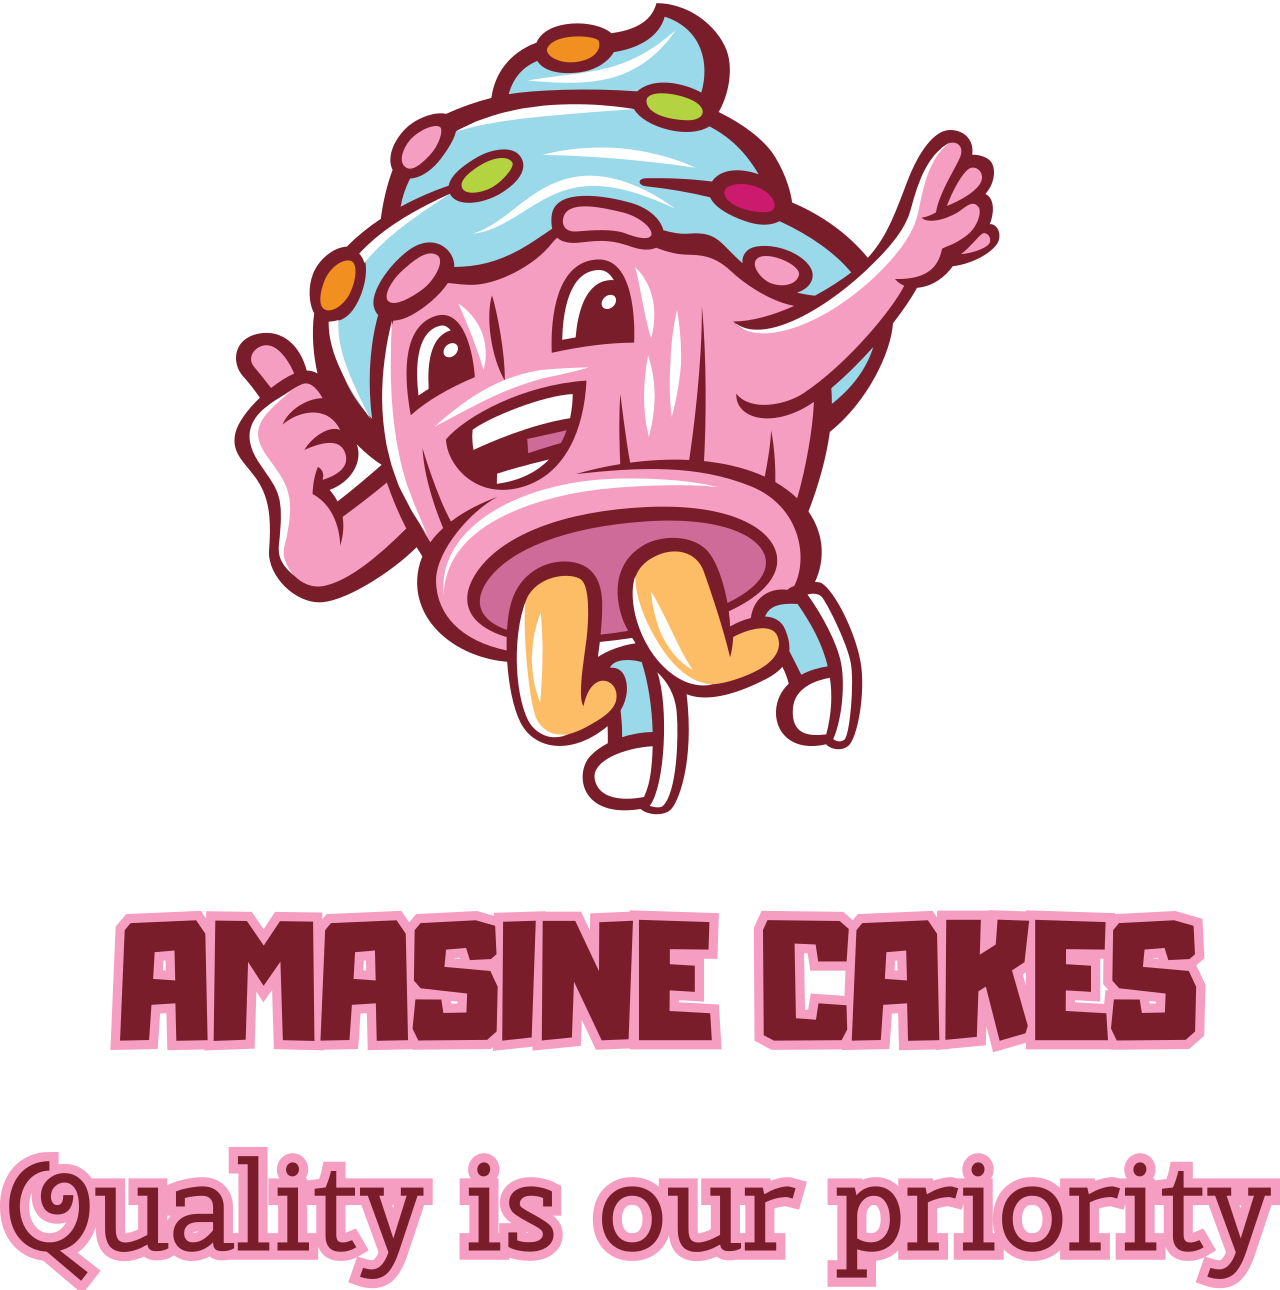 AMASINE CAKES's web page